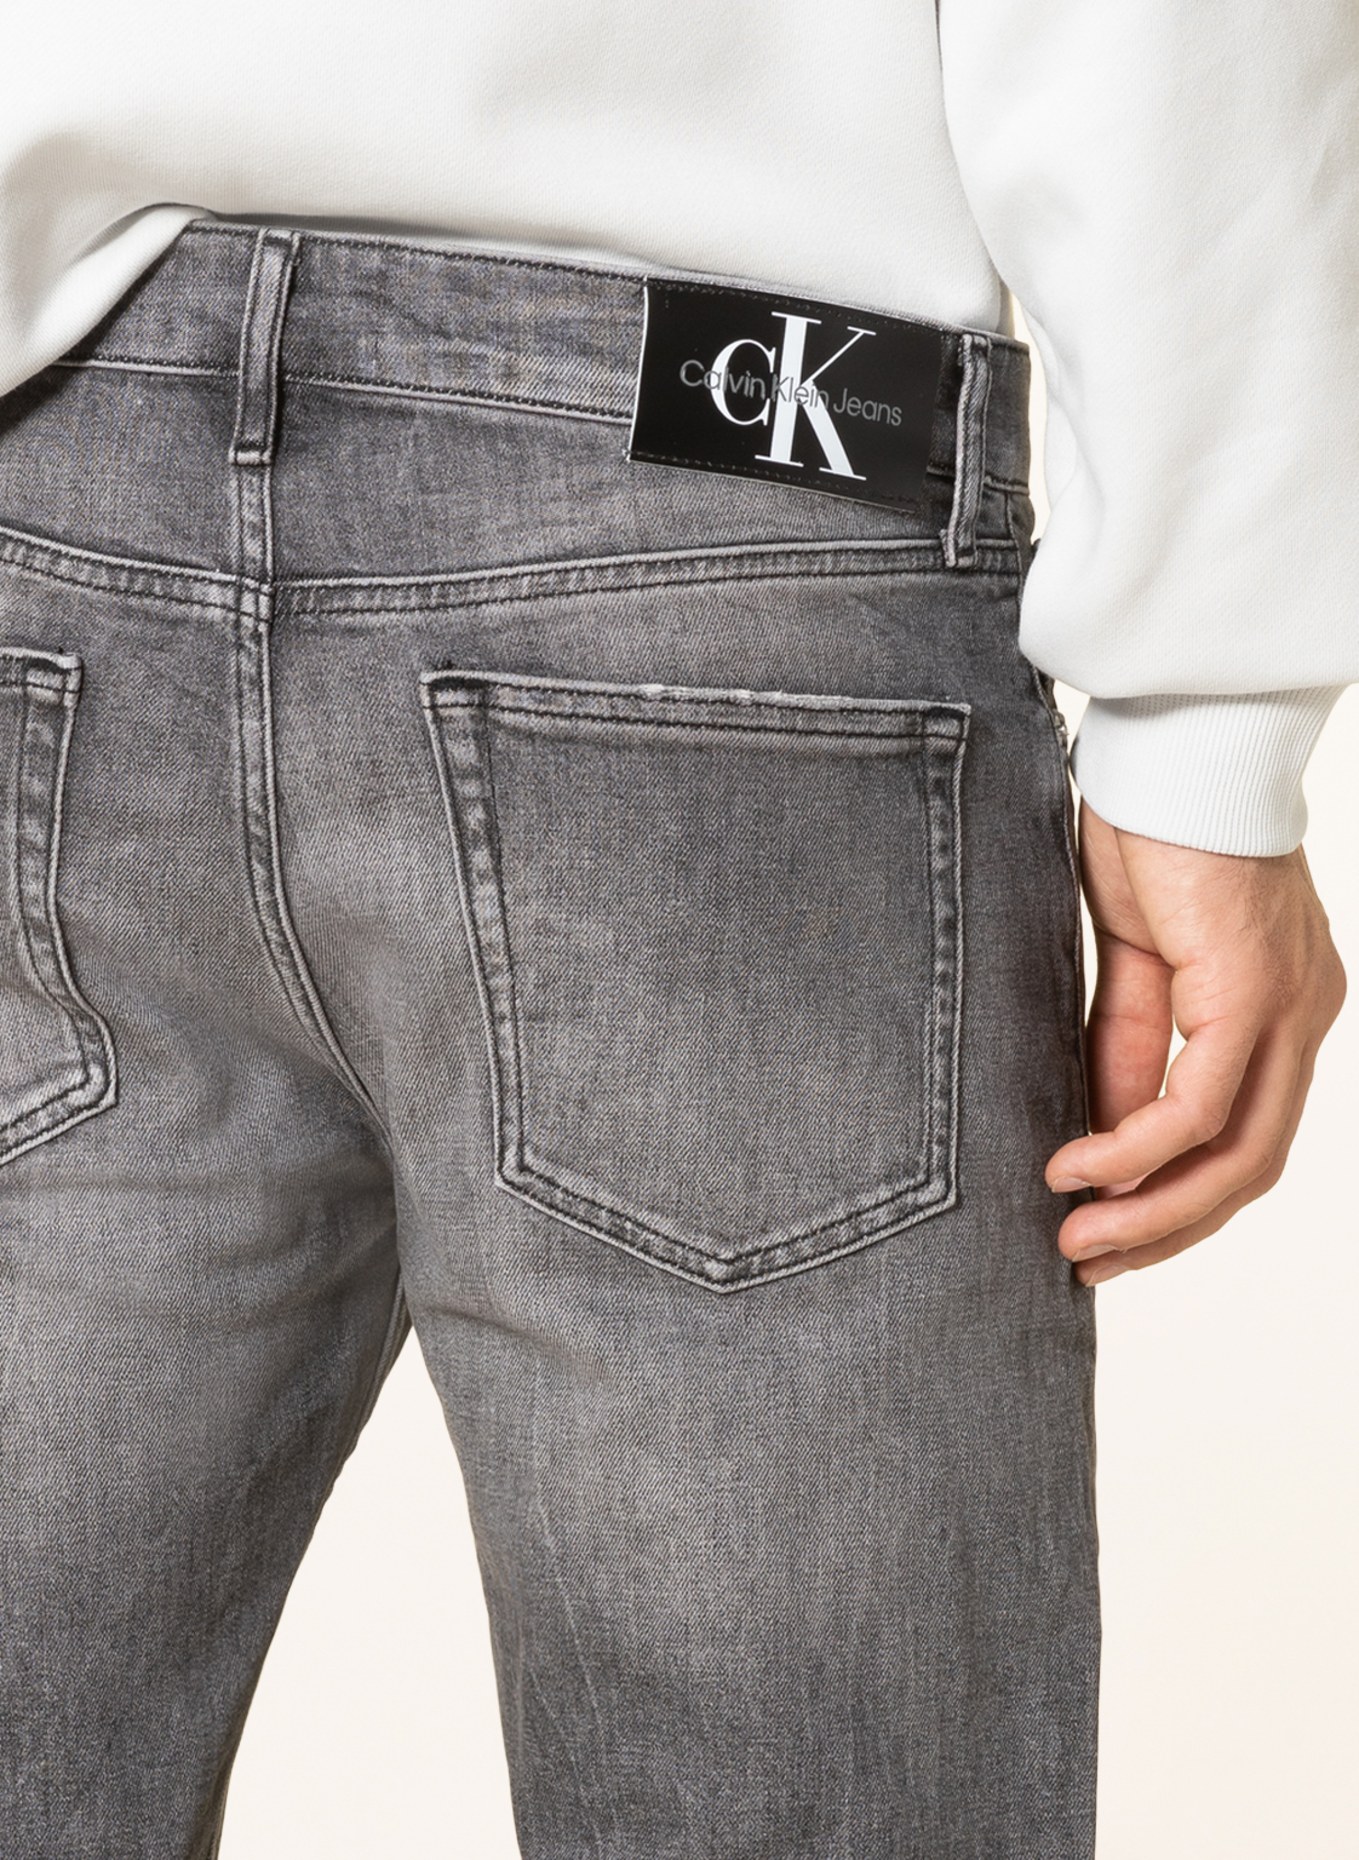 Calvin Klein Jeans Jeans Slim Tapered Fit in 1bz denim grey